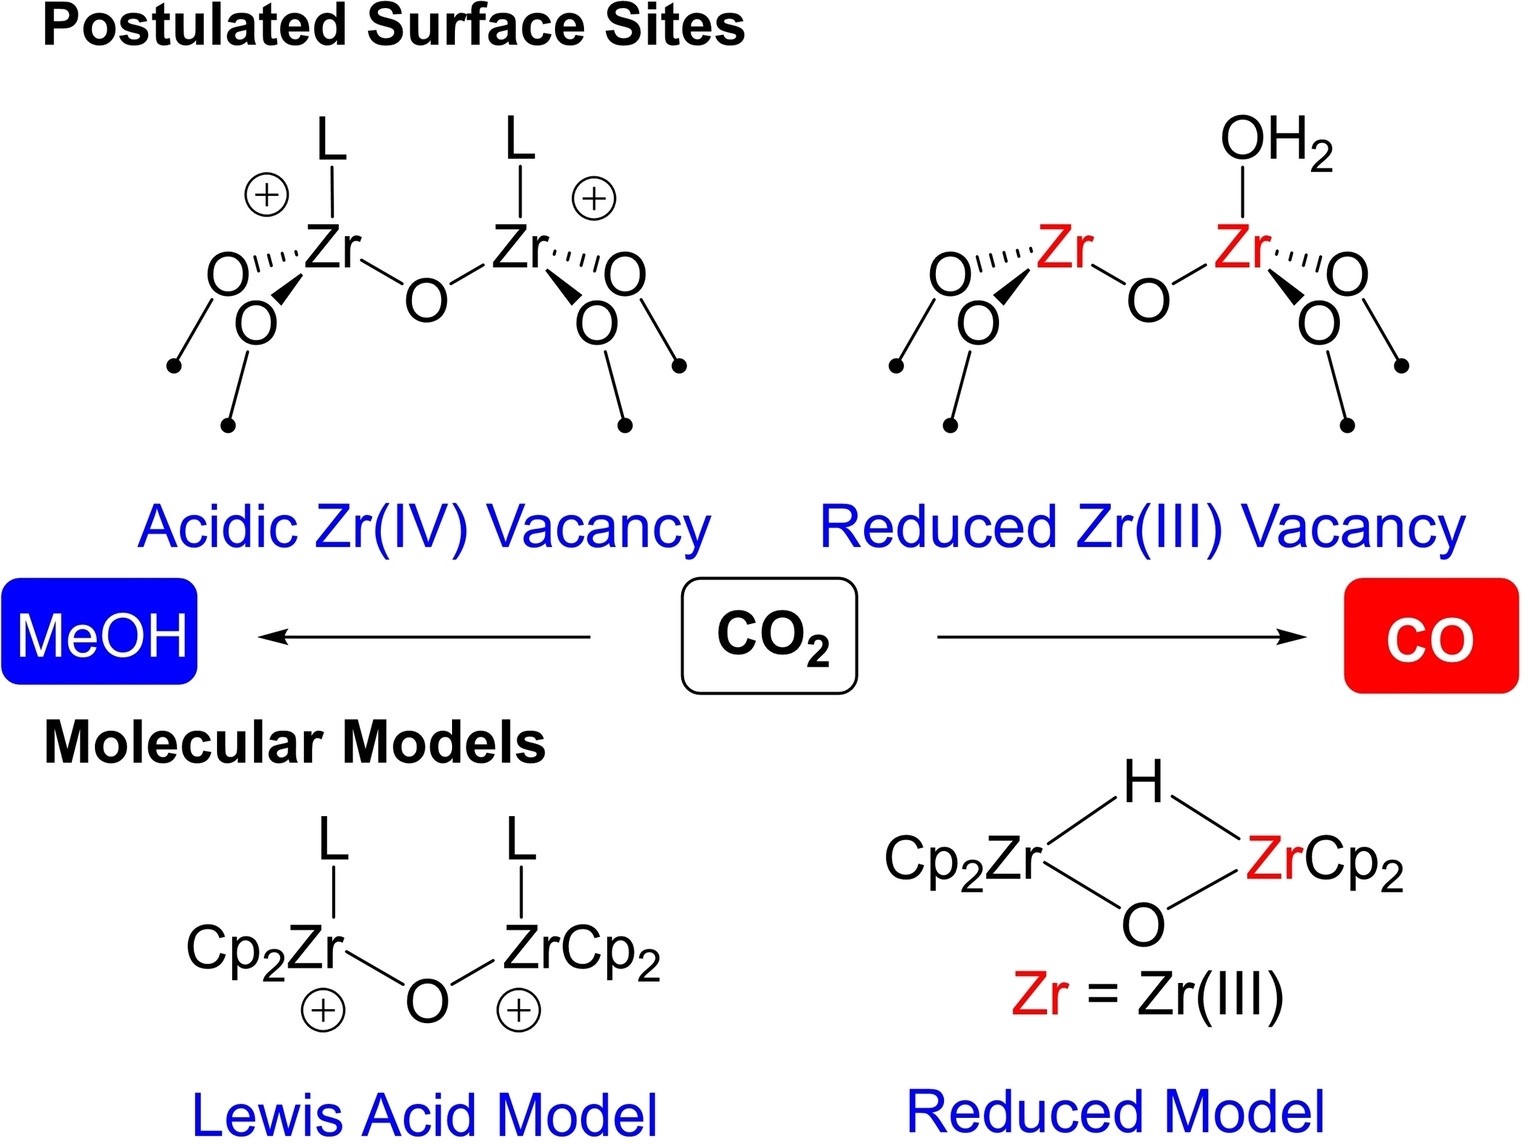 Oxo-Bridged Zr dimers as well-defined models of oxygen vacancies on ZrO2